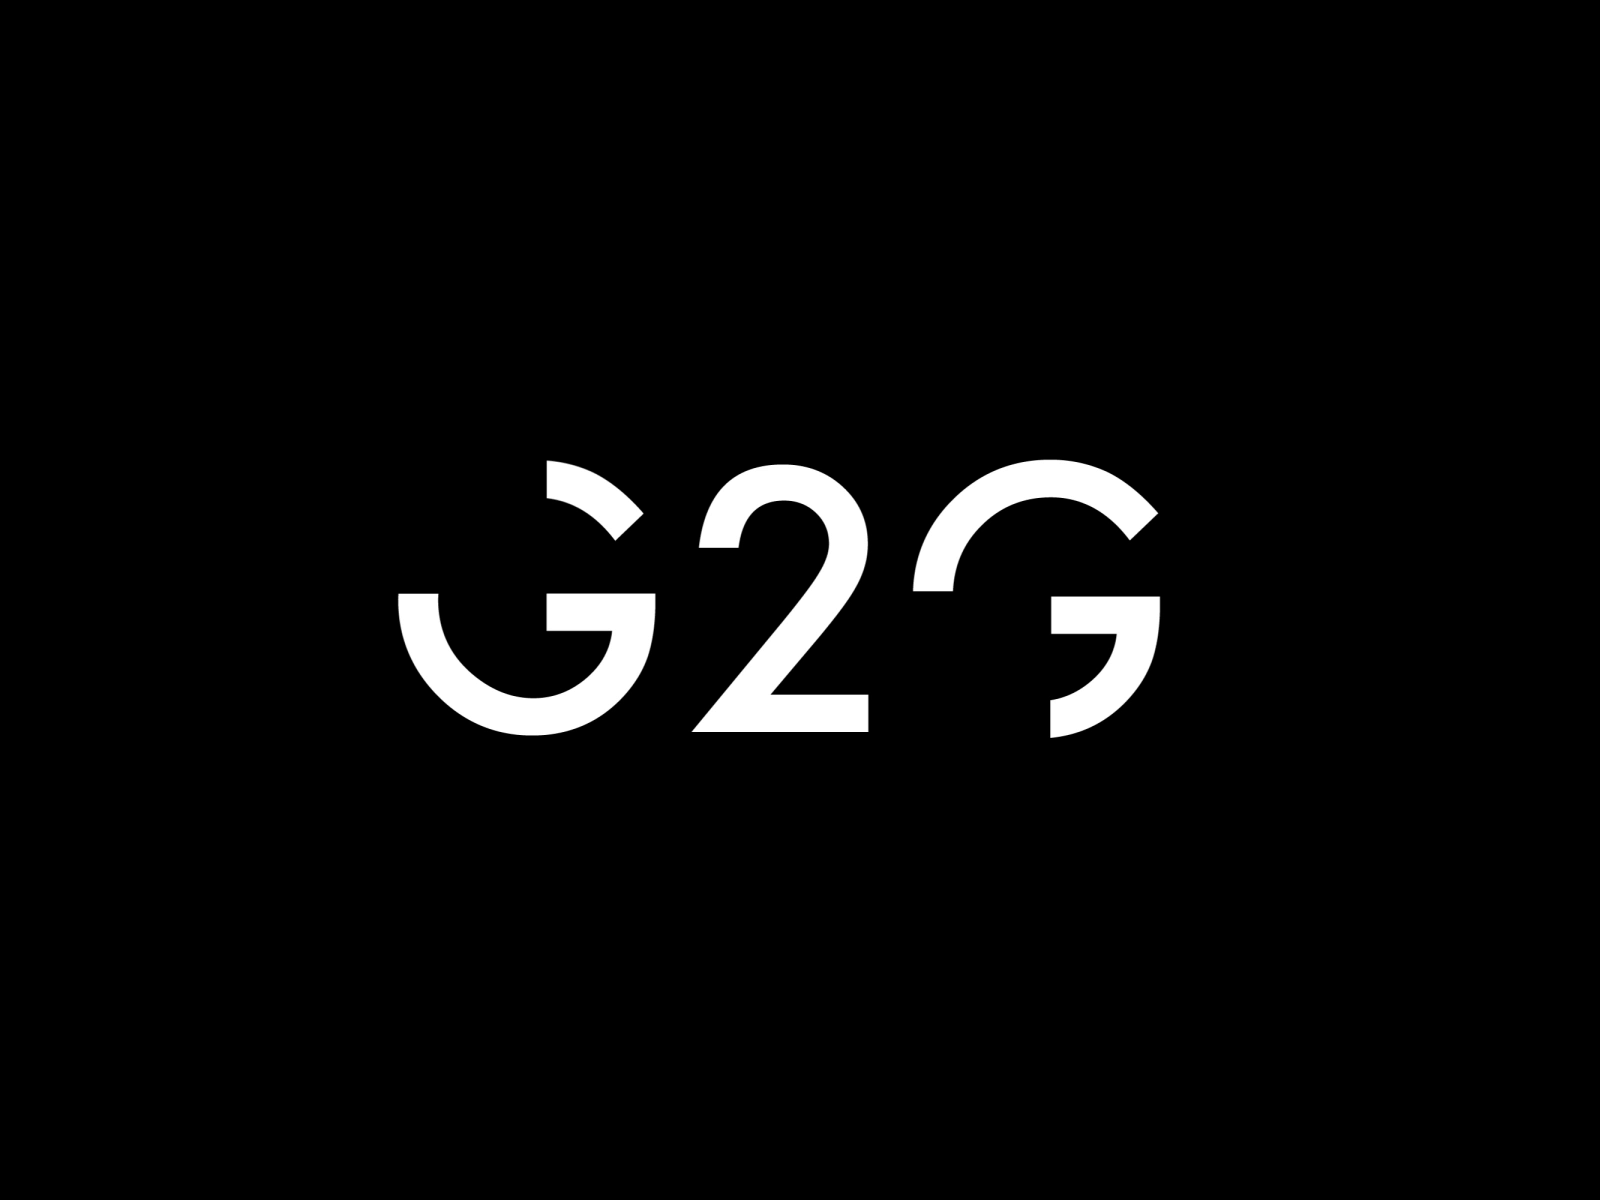 G2G / Logo Animation by Ephraim Joseph on Dribbble